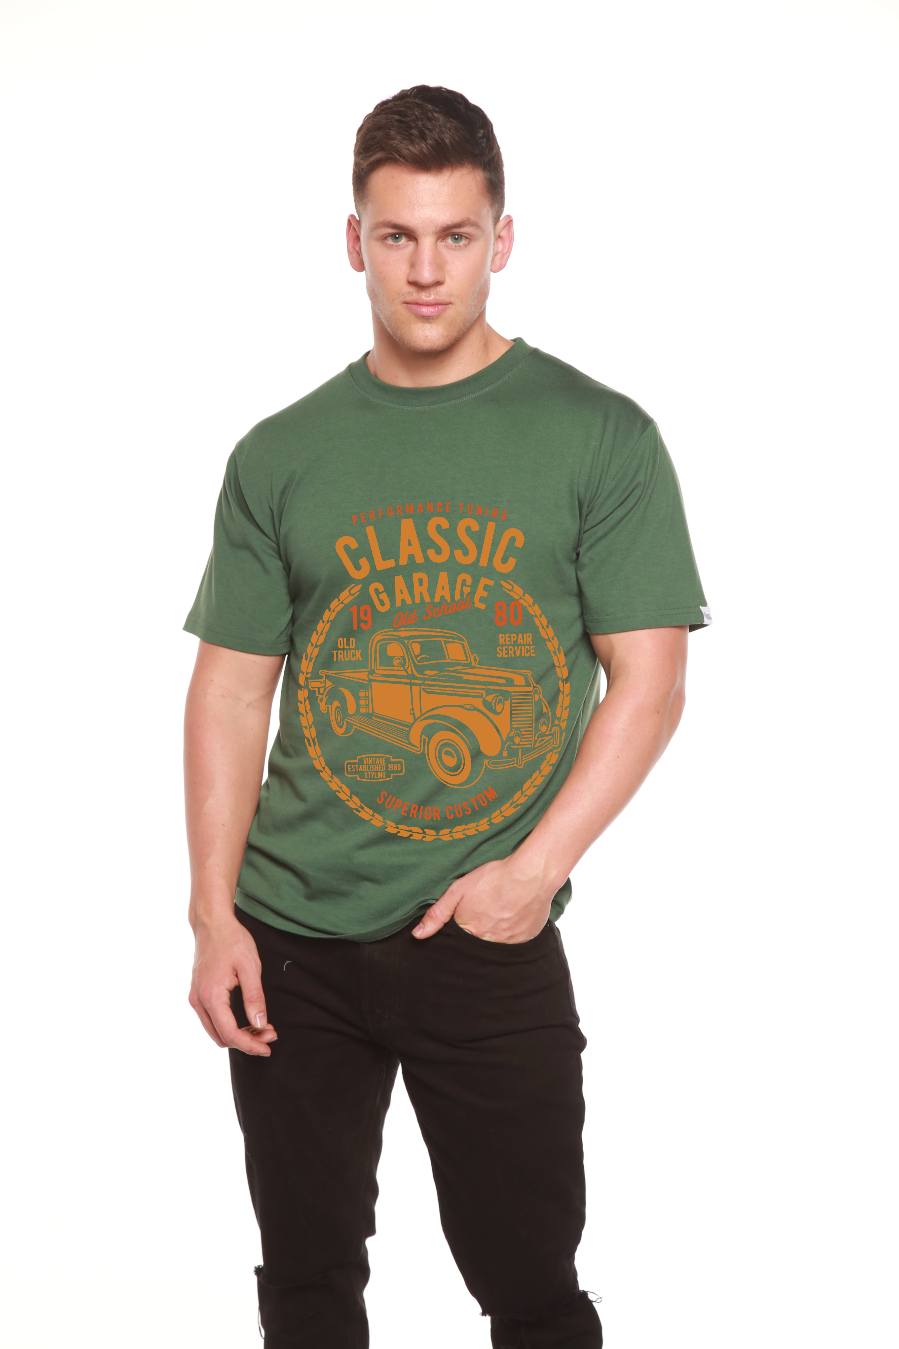 Classic Garage Men's Bamboo Viscose/Organic Cotton Short Sleeve T-Shirt - Spun Bamboo